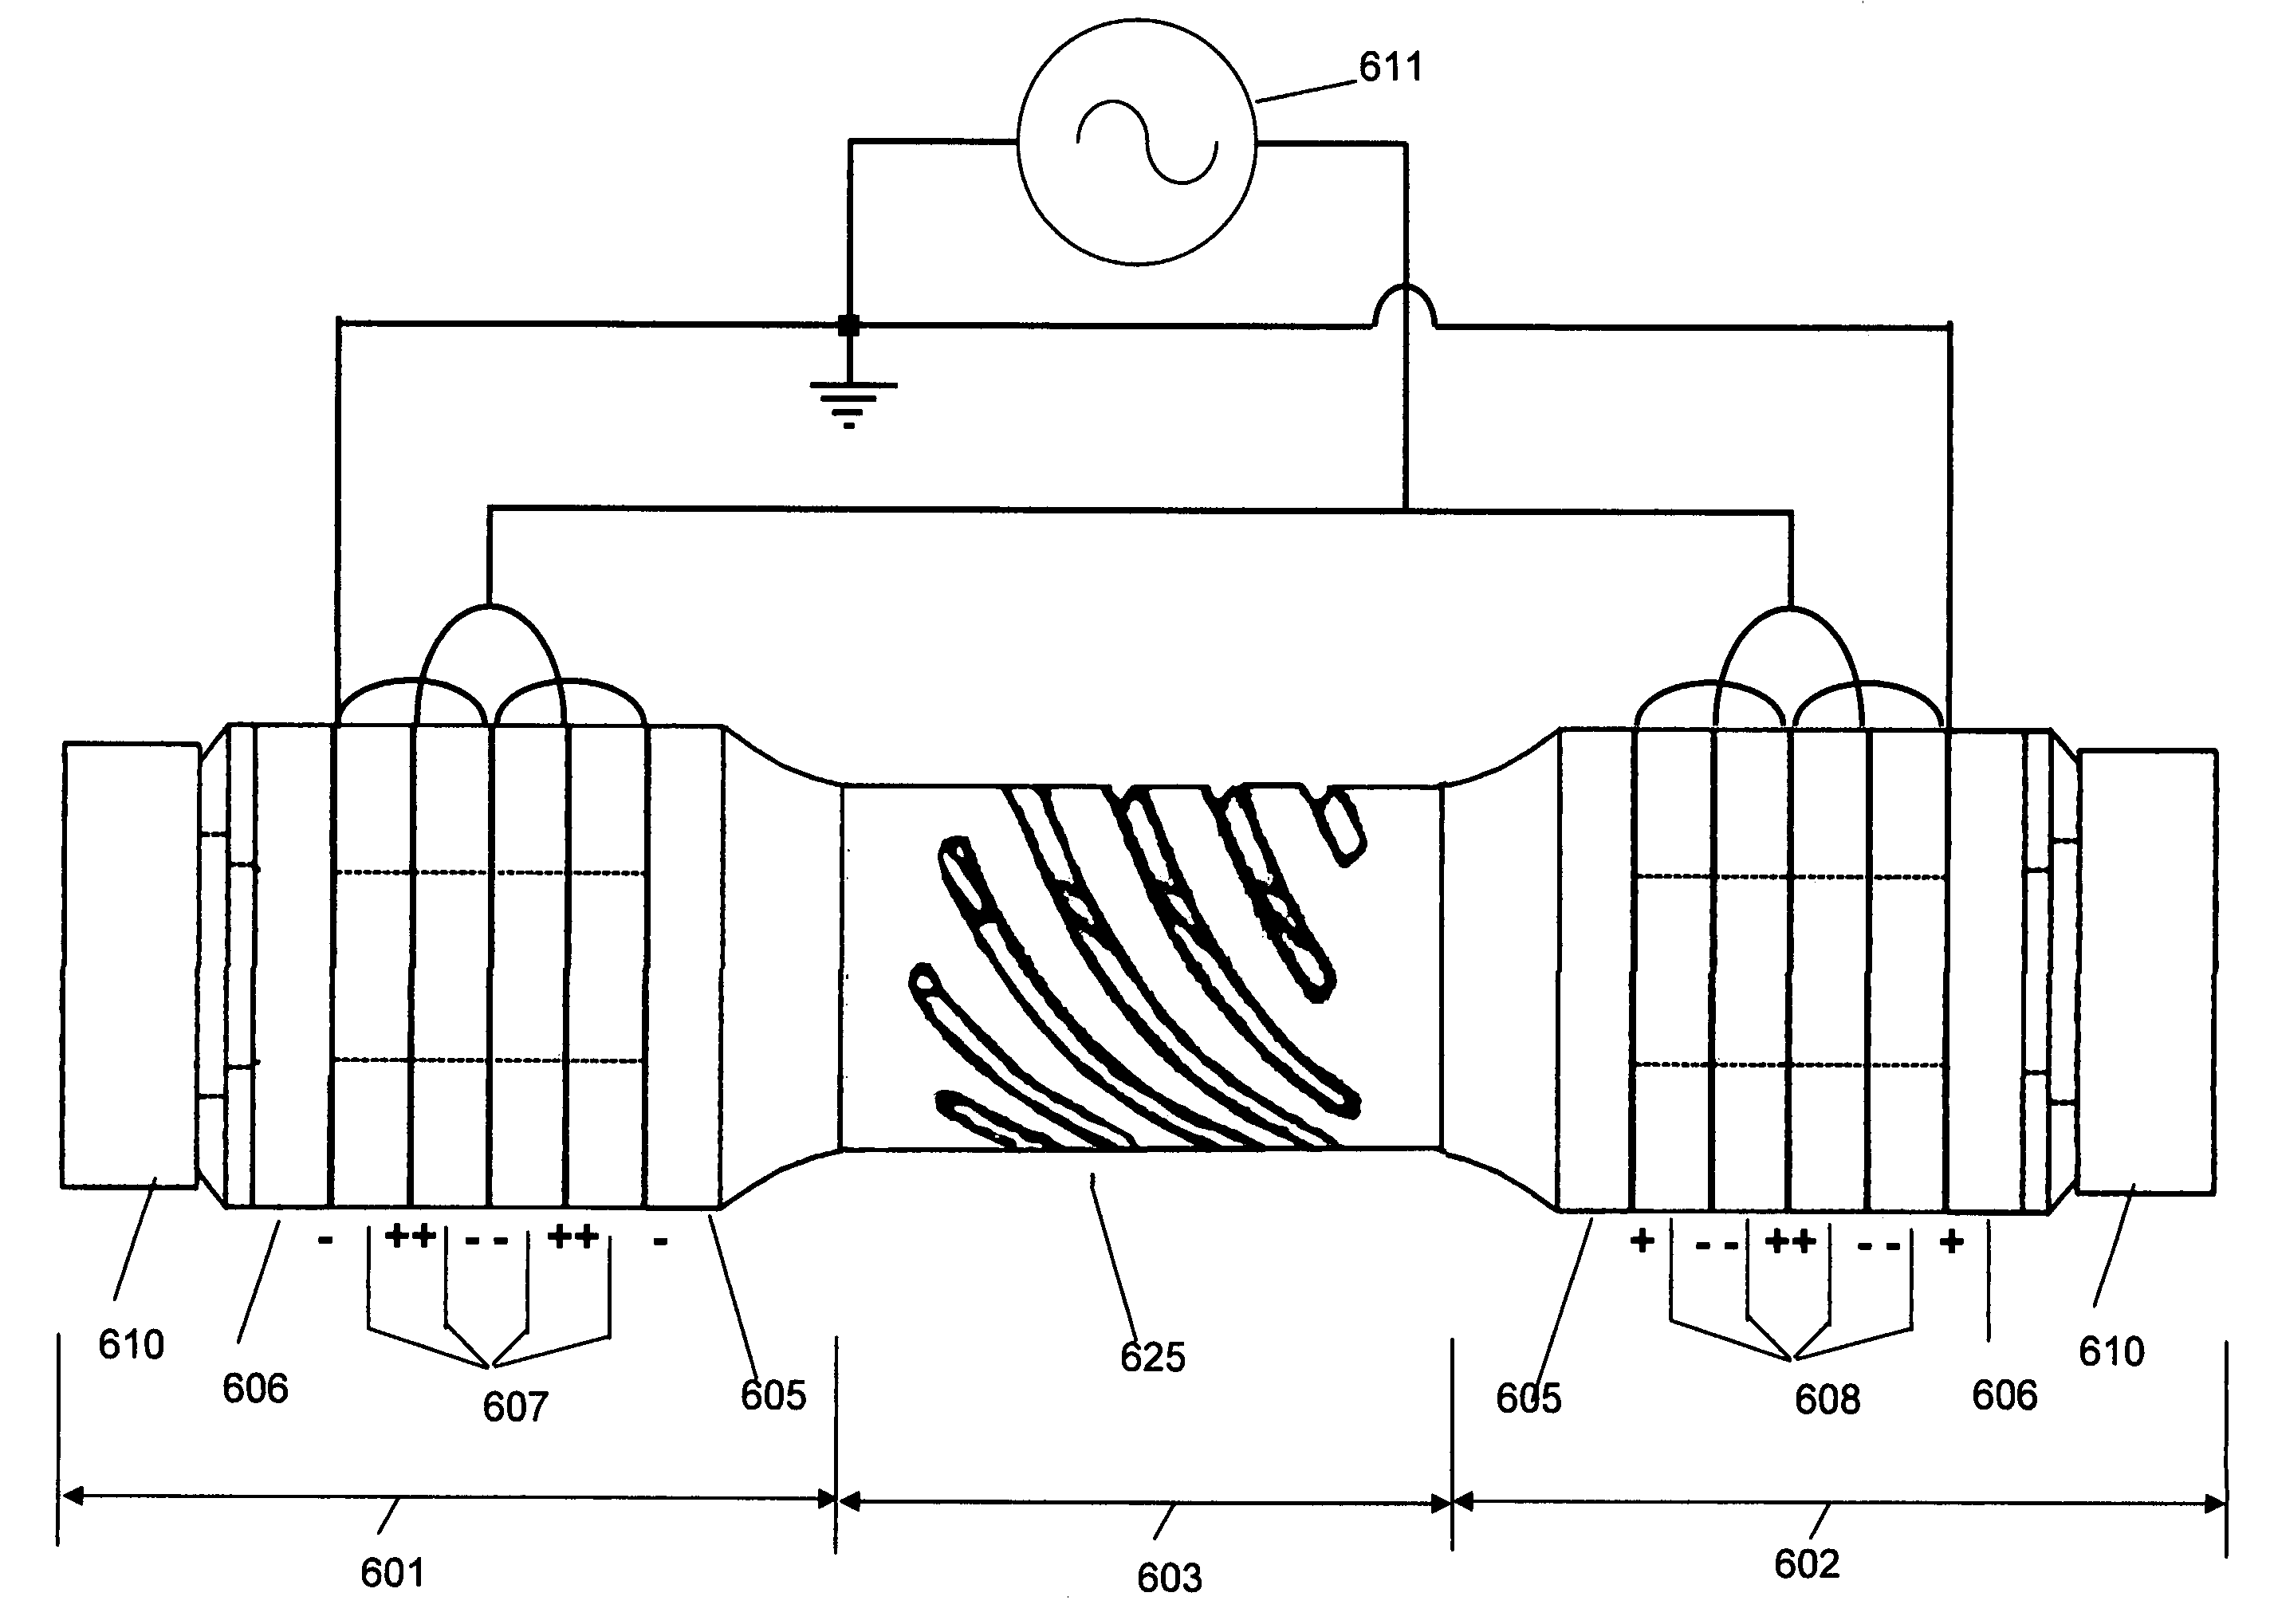 Ultrasonic torsional mode and longitudinal-torsional mode transducer system